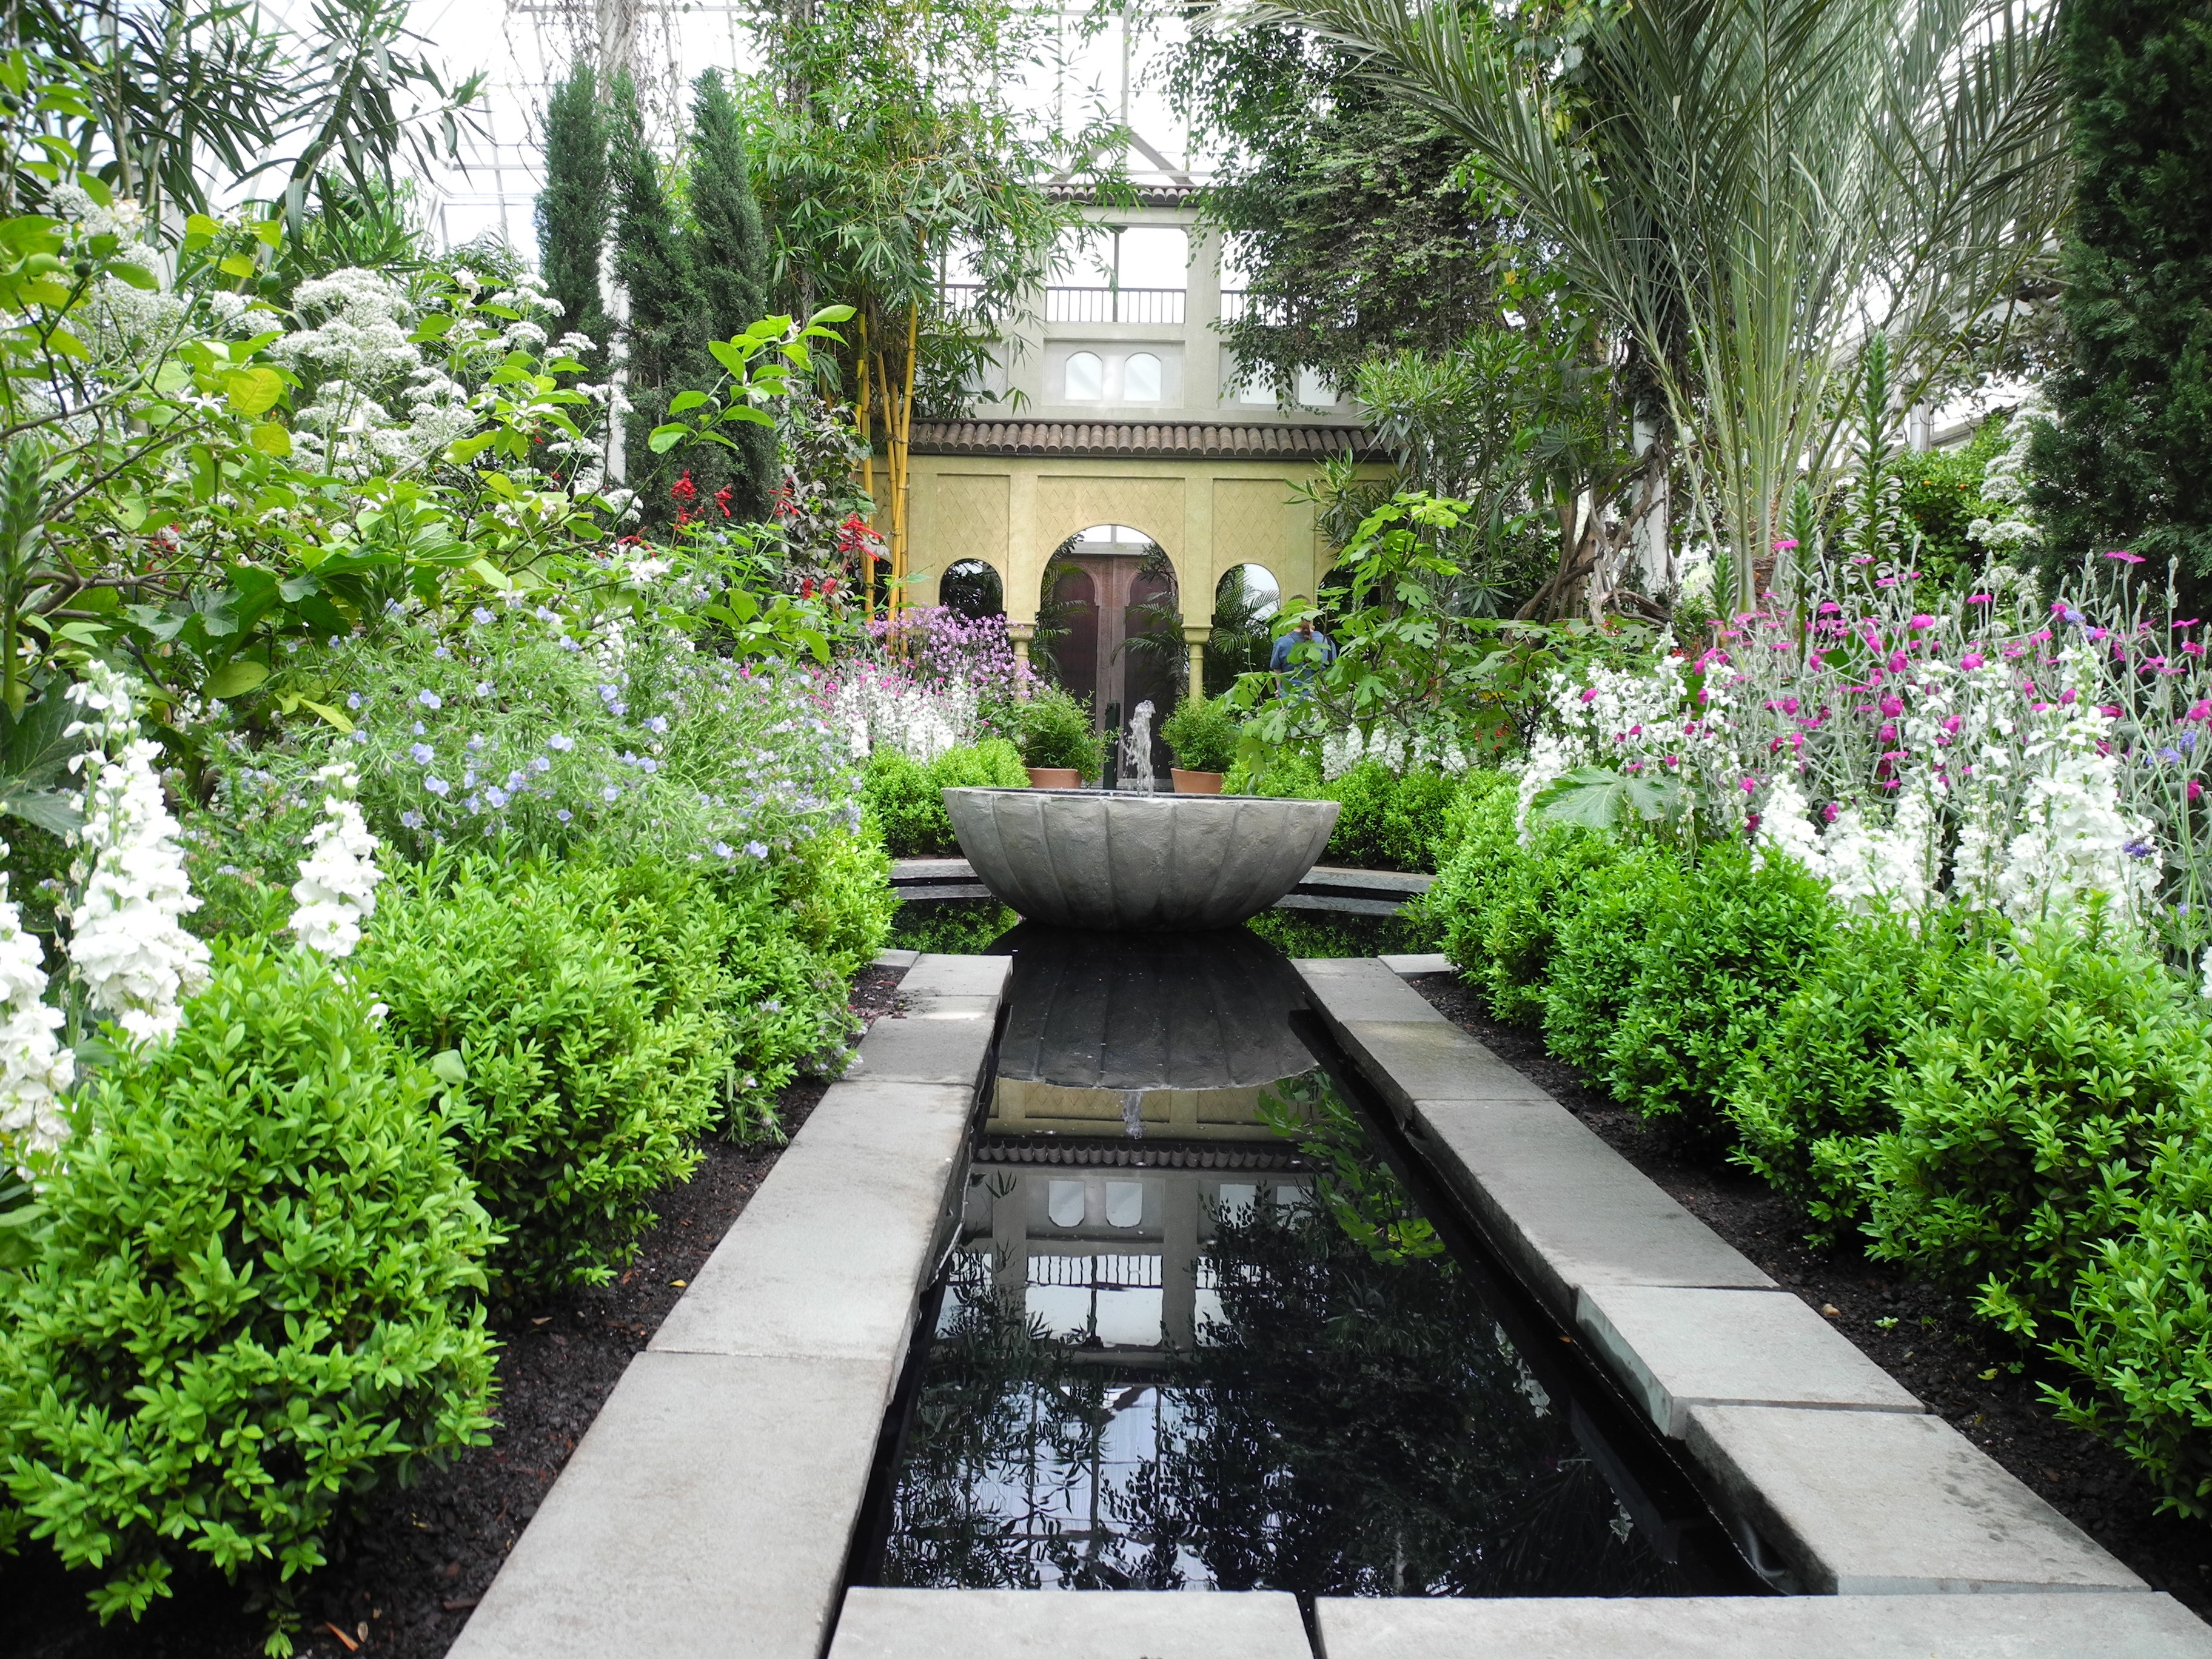 Spanish Paradise: Gardens of the Alhambra at The New York Botanical Garden 